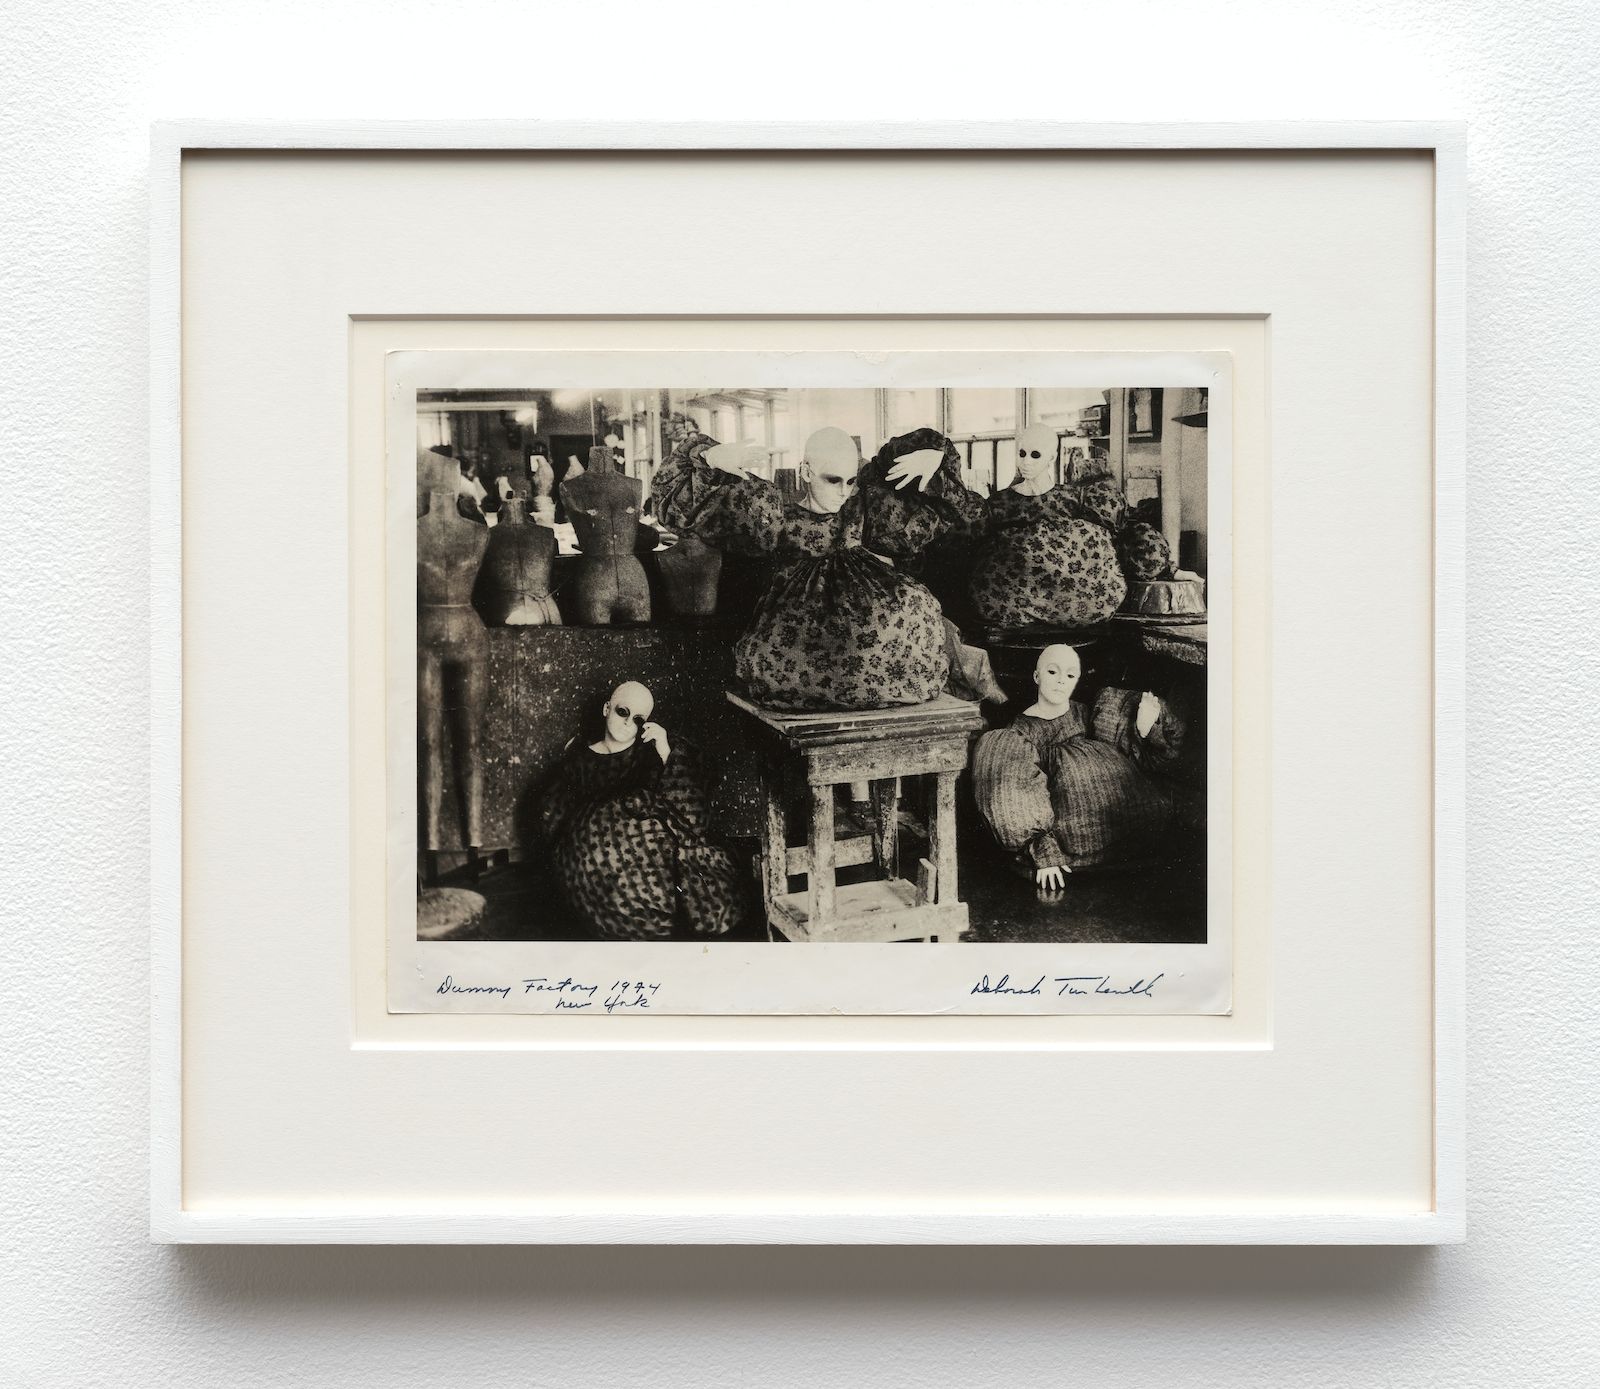 Deborah Turbeville, Dummy Factory, 1974, B&amp;W print, 11 × 14 in., (27.94 × 35.56 cm)